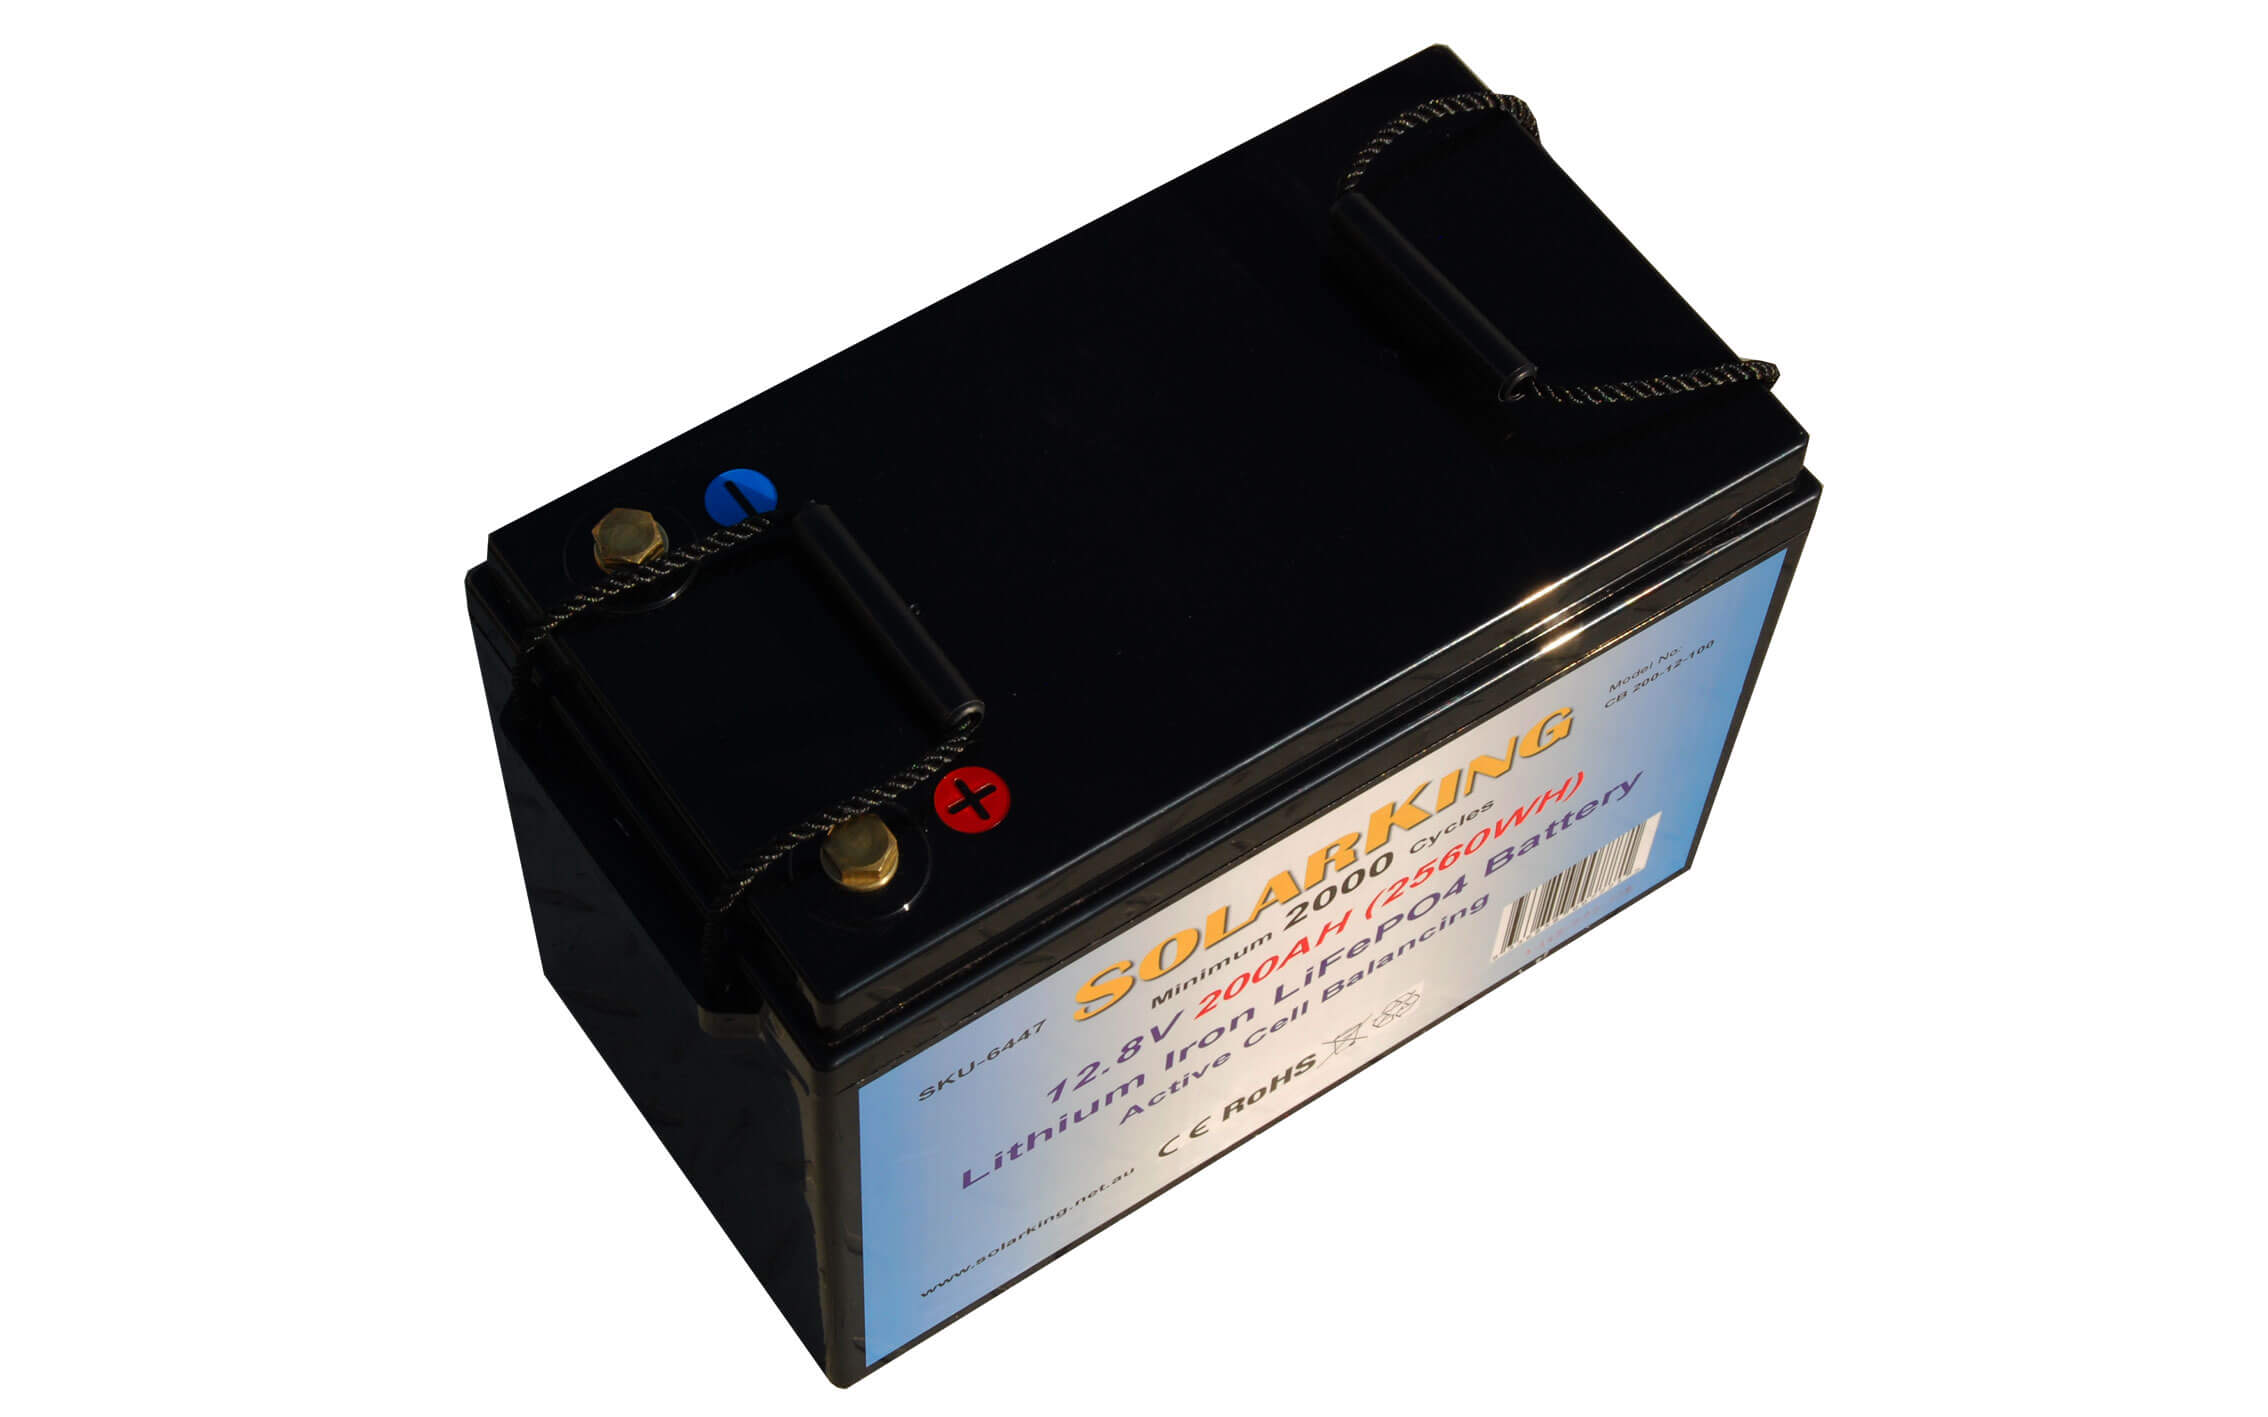 12.8V 200AH  Solarking Lithium Iron Battery Plastic Case CB-200-12-100